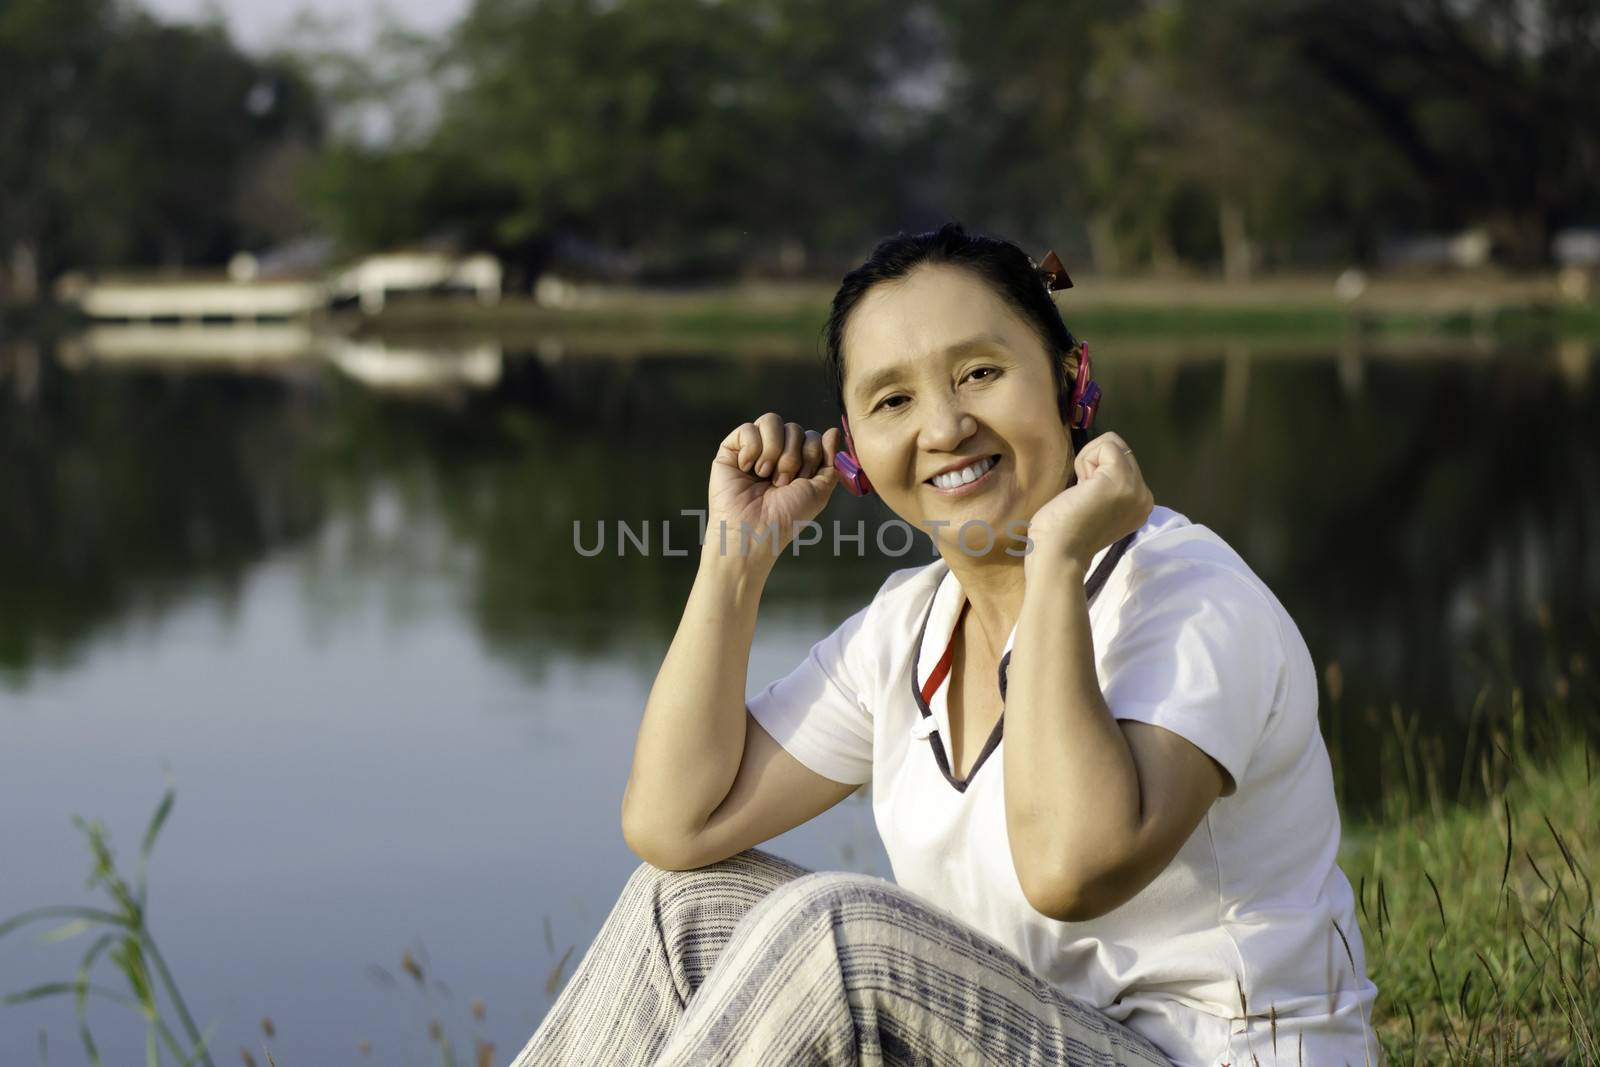 Beautiful asian woman listening music in headphones